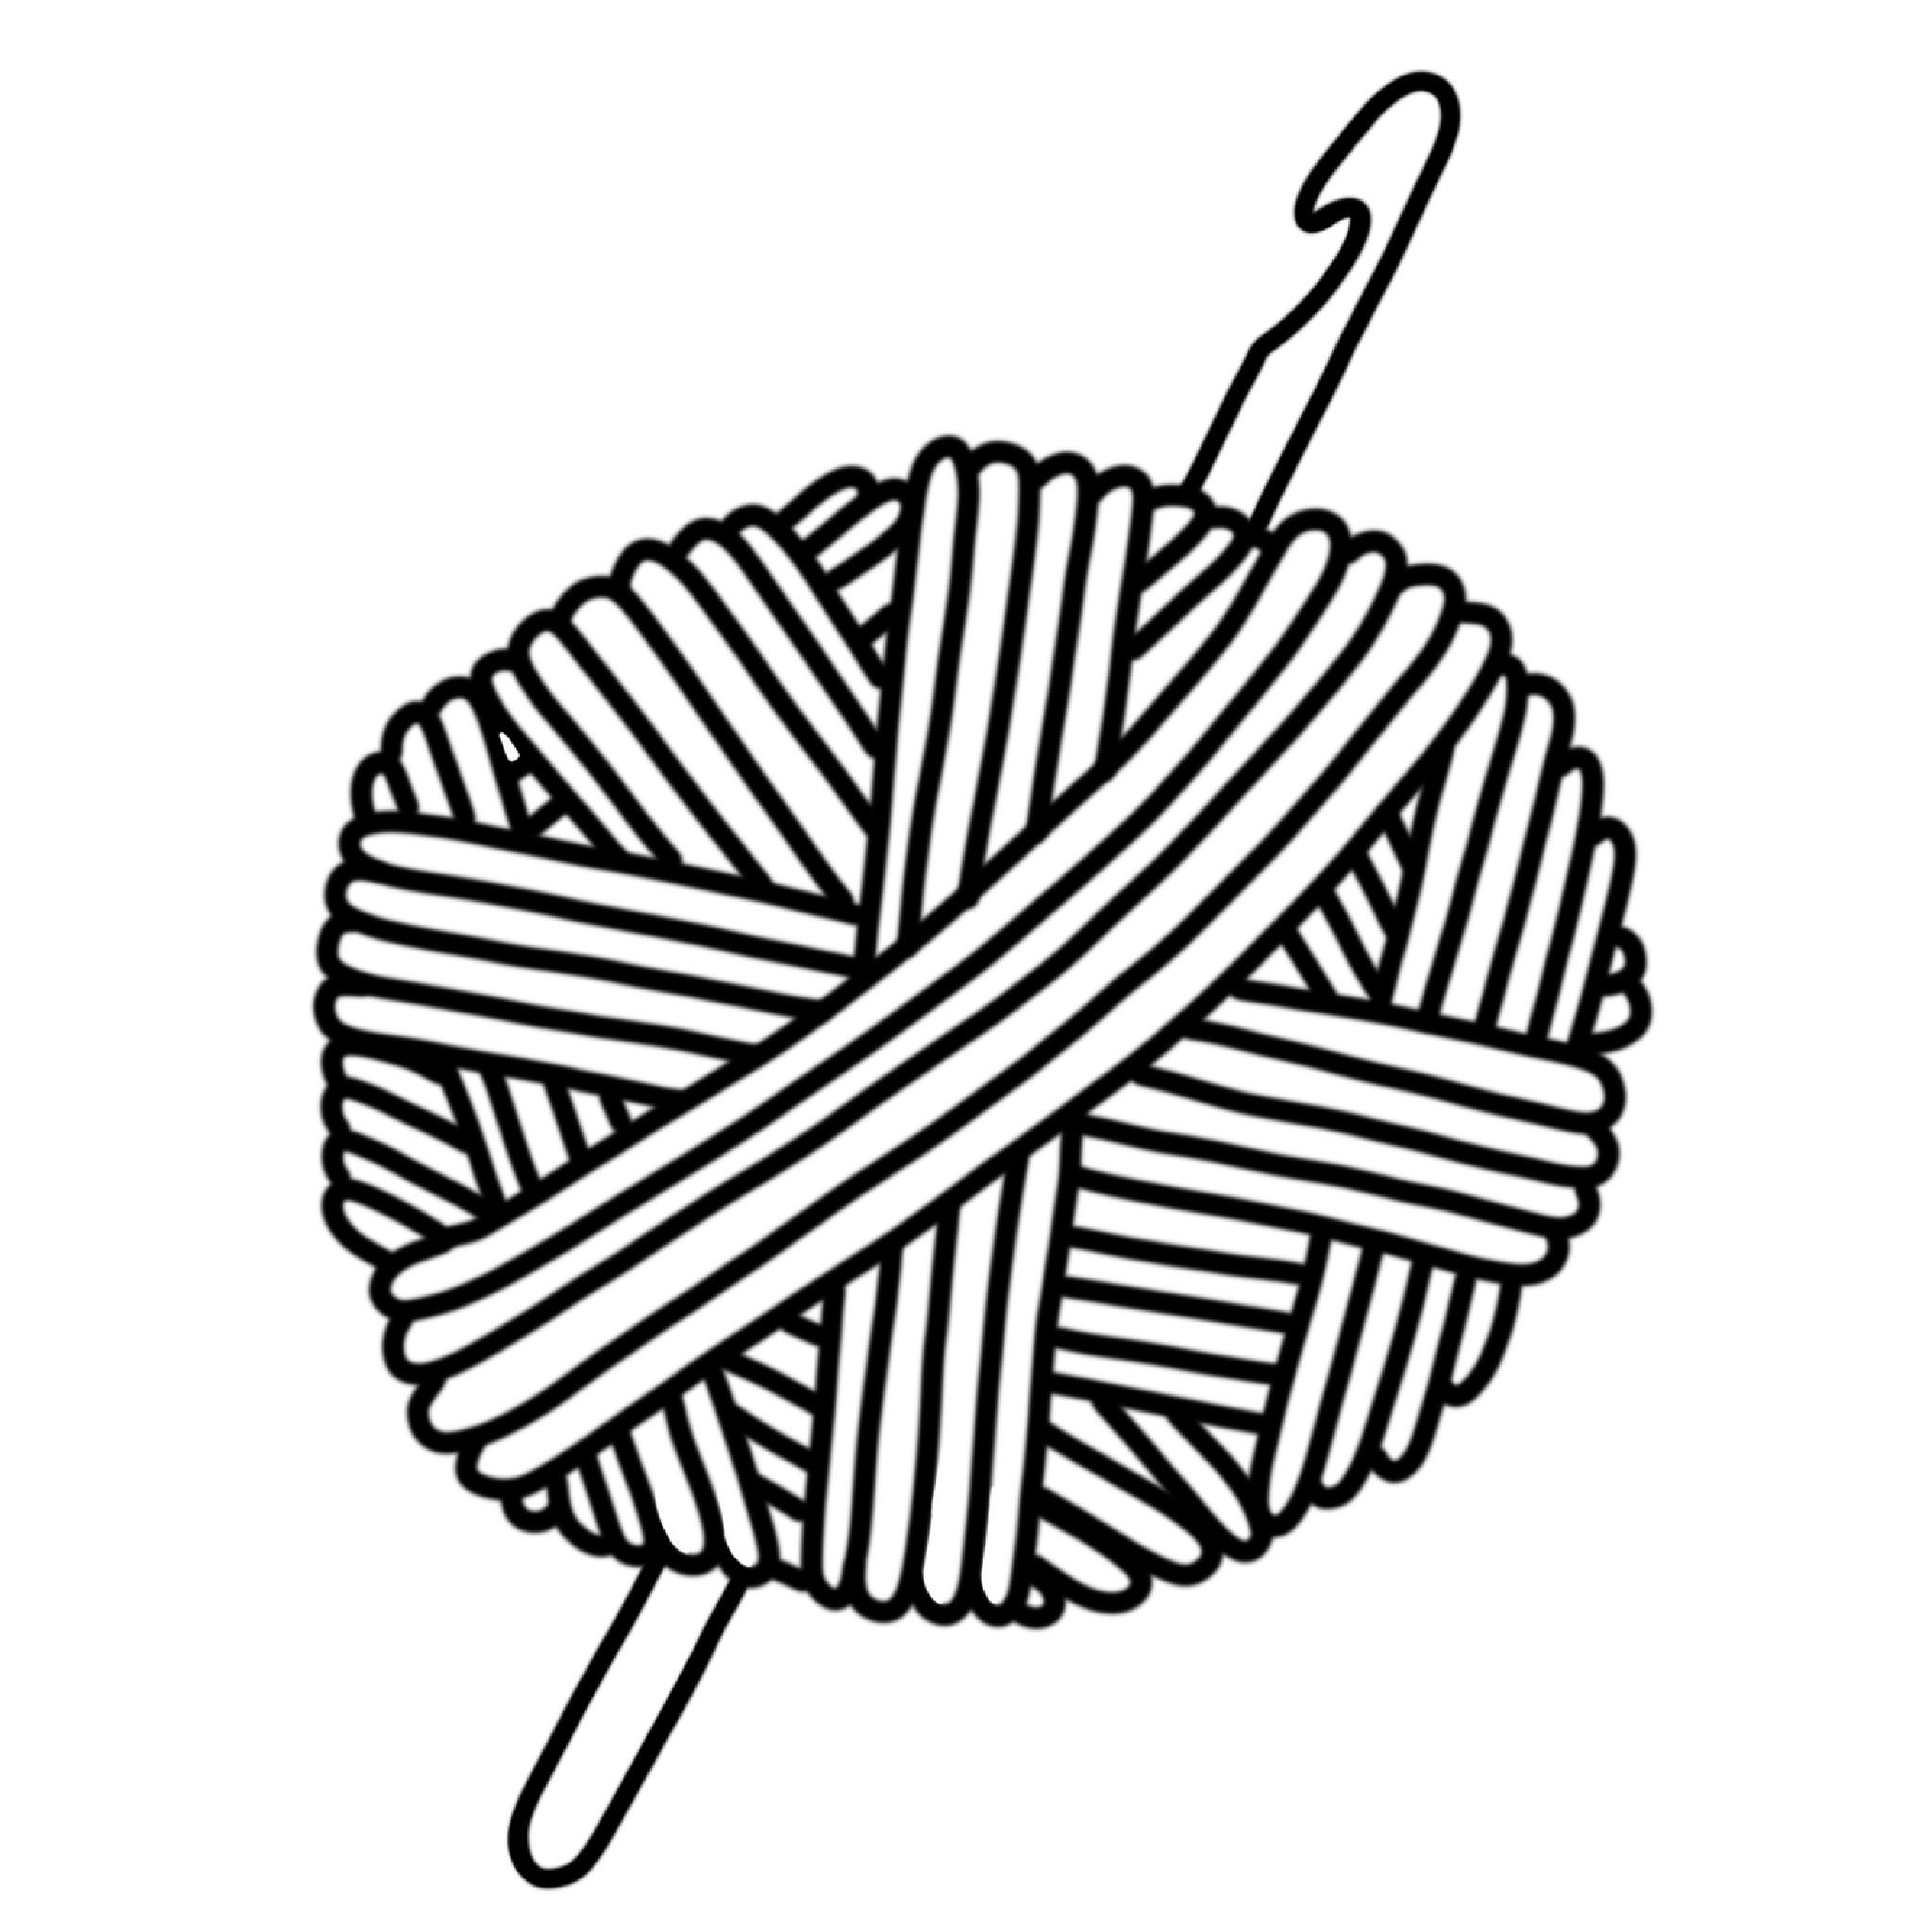 Crochet Hook With Yarn Ball Vinyl Decal sticker - Etsy